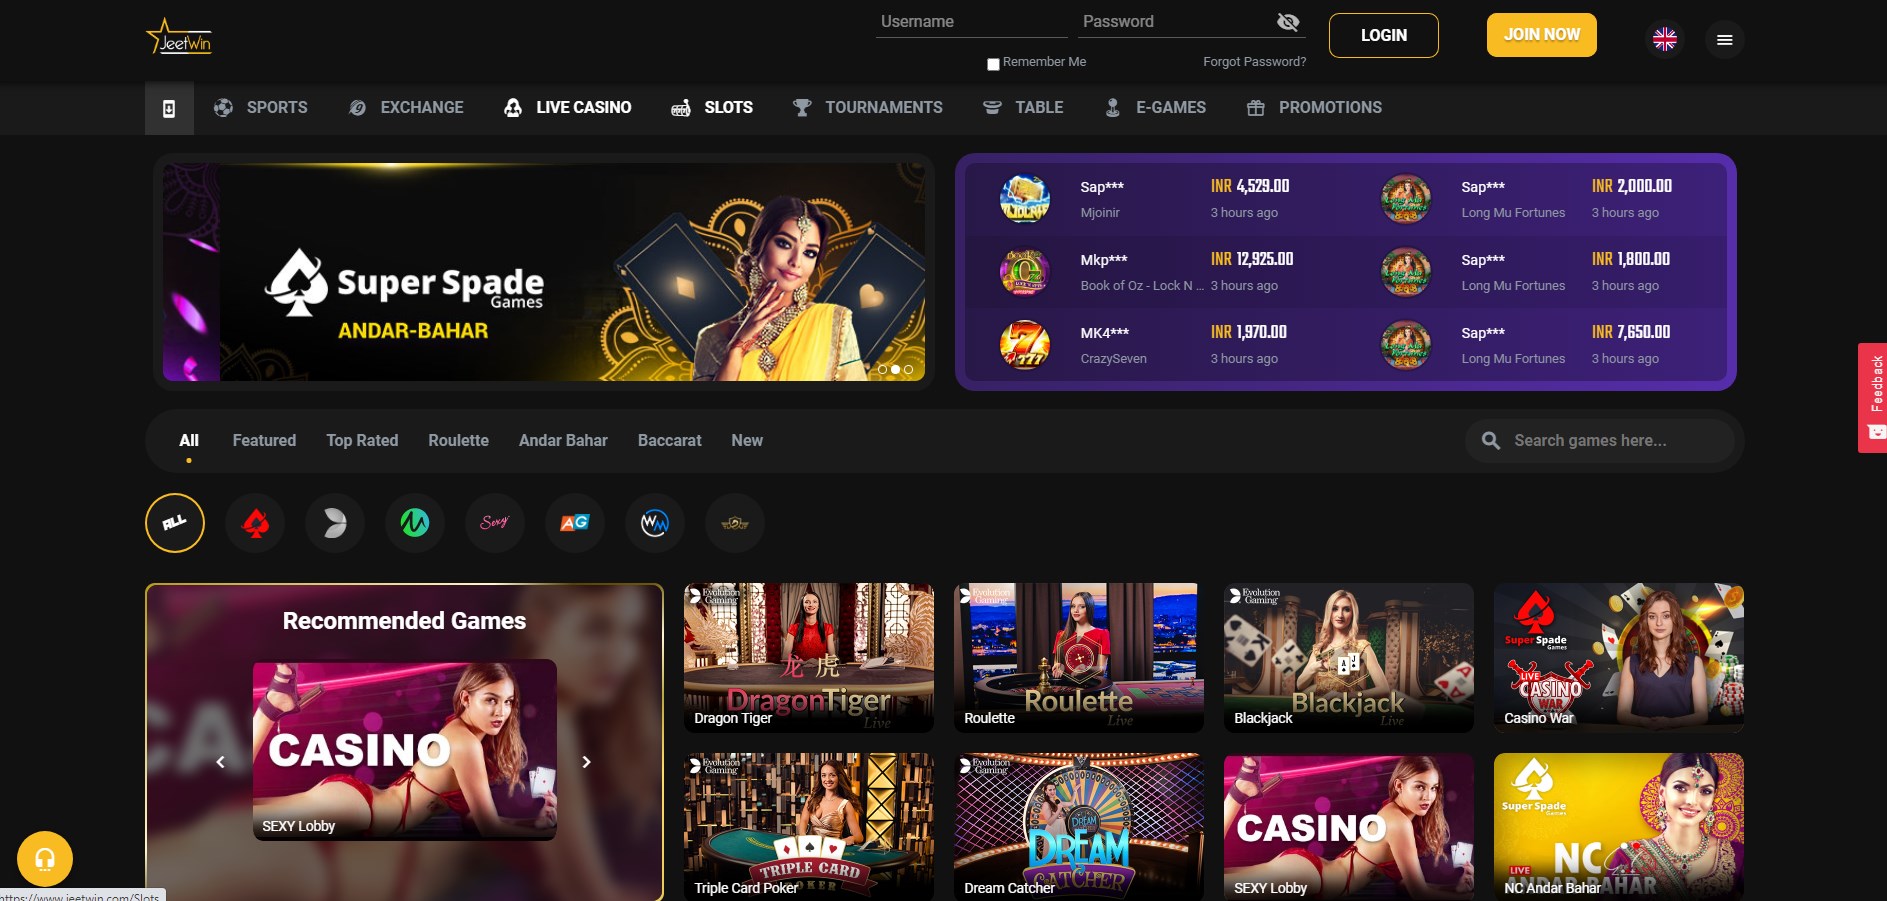 JeetWin Casino Live Dealer Games